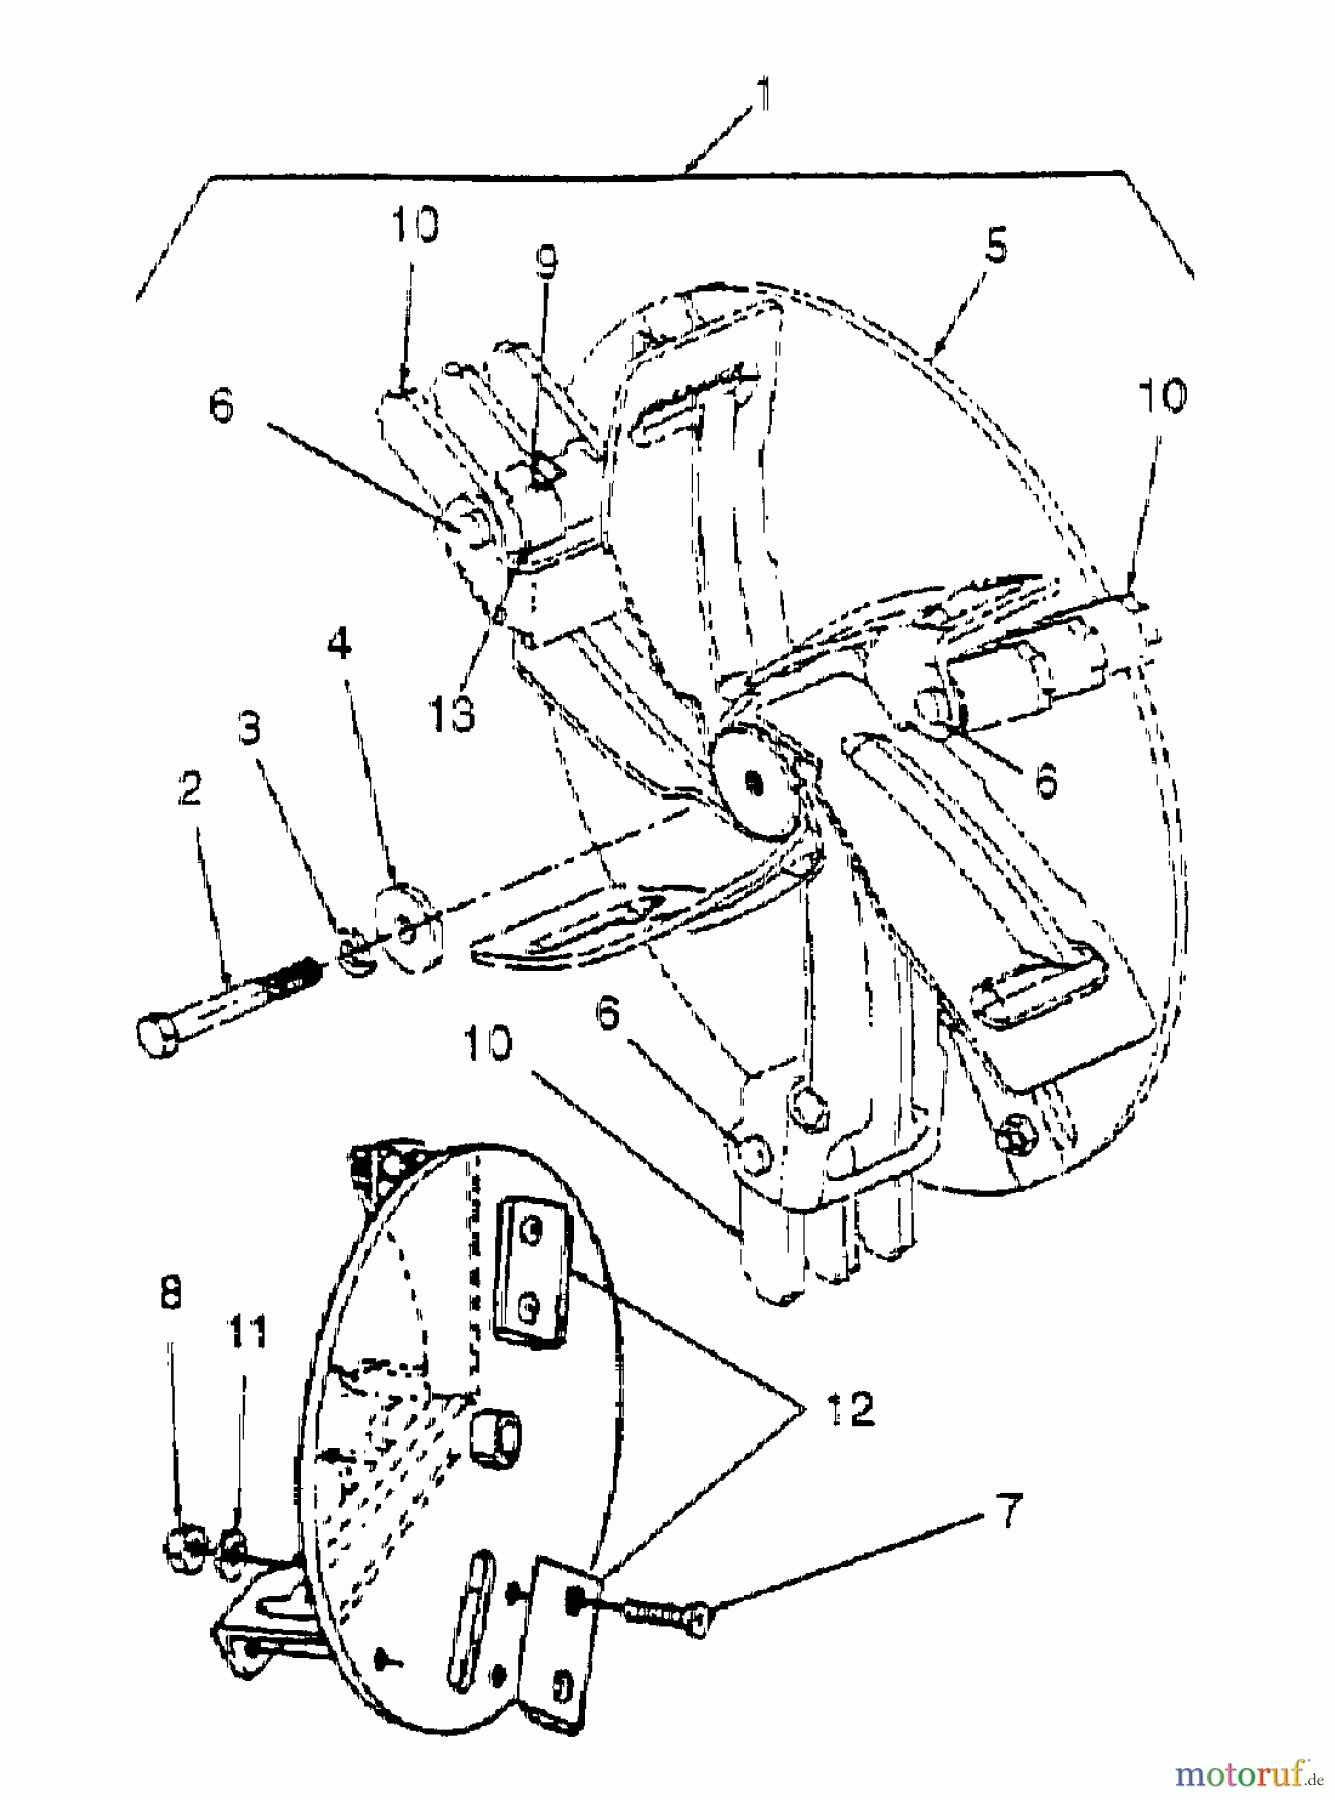  Gutbrod Leaf blower, Blower vac 203 B 24A-203B604  (1998) Impeller with blades